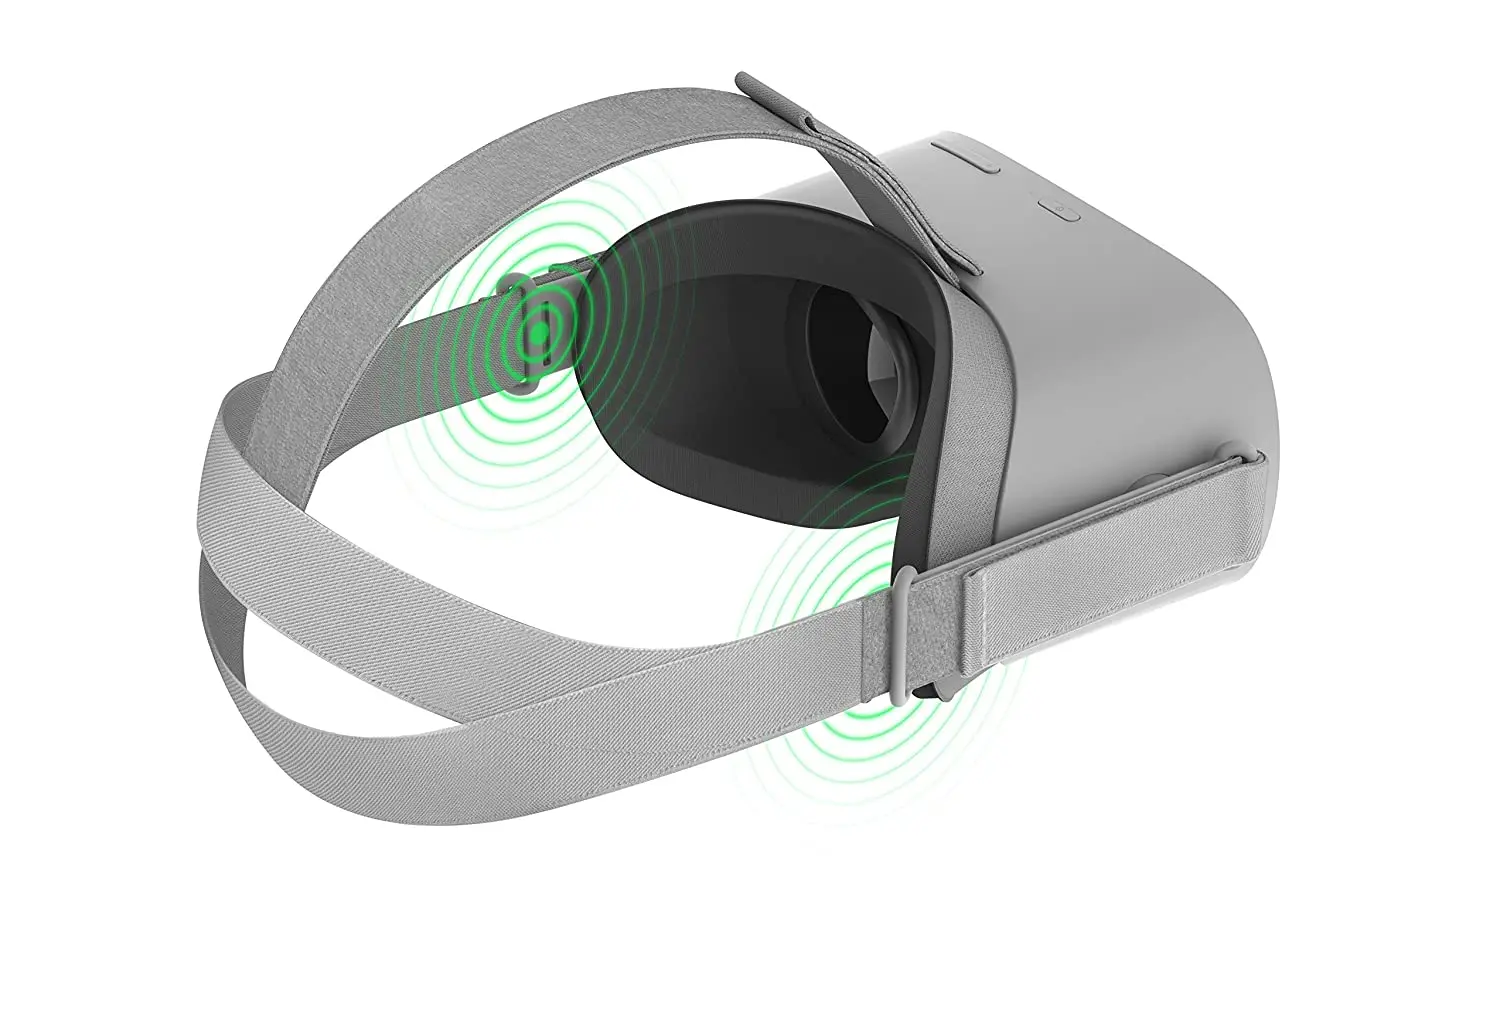 Tanio Original Oculus Go Standalone Virtual Reality Headset sklep